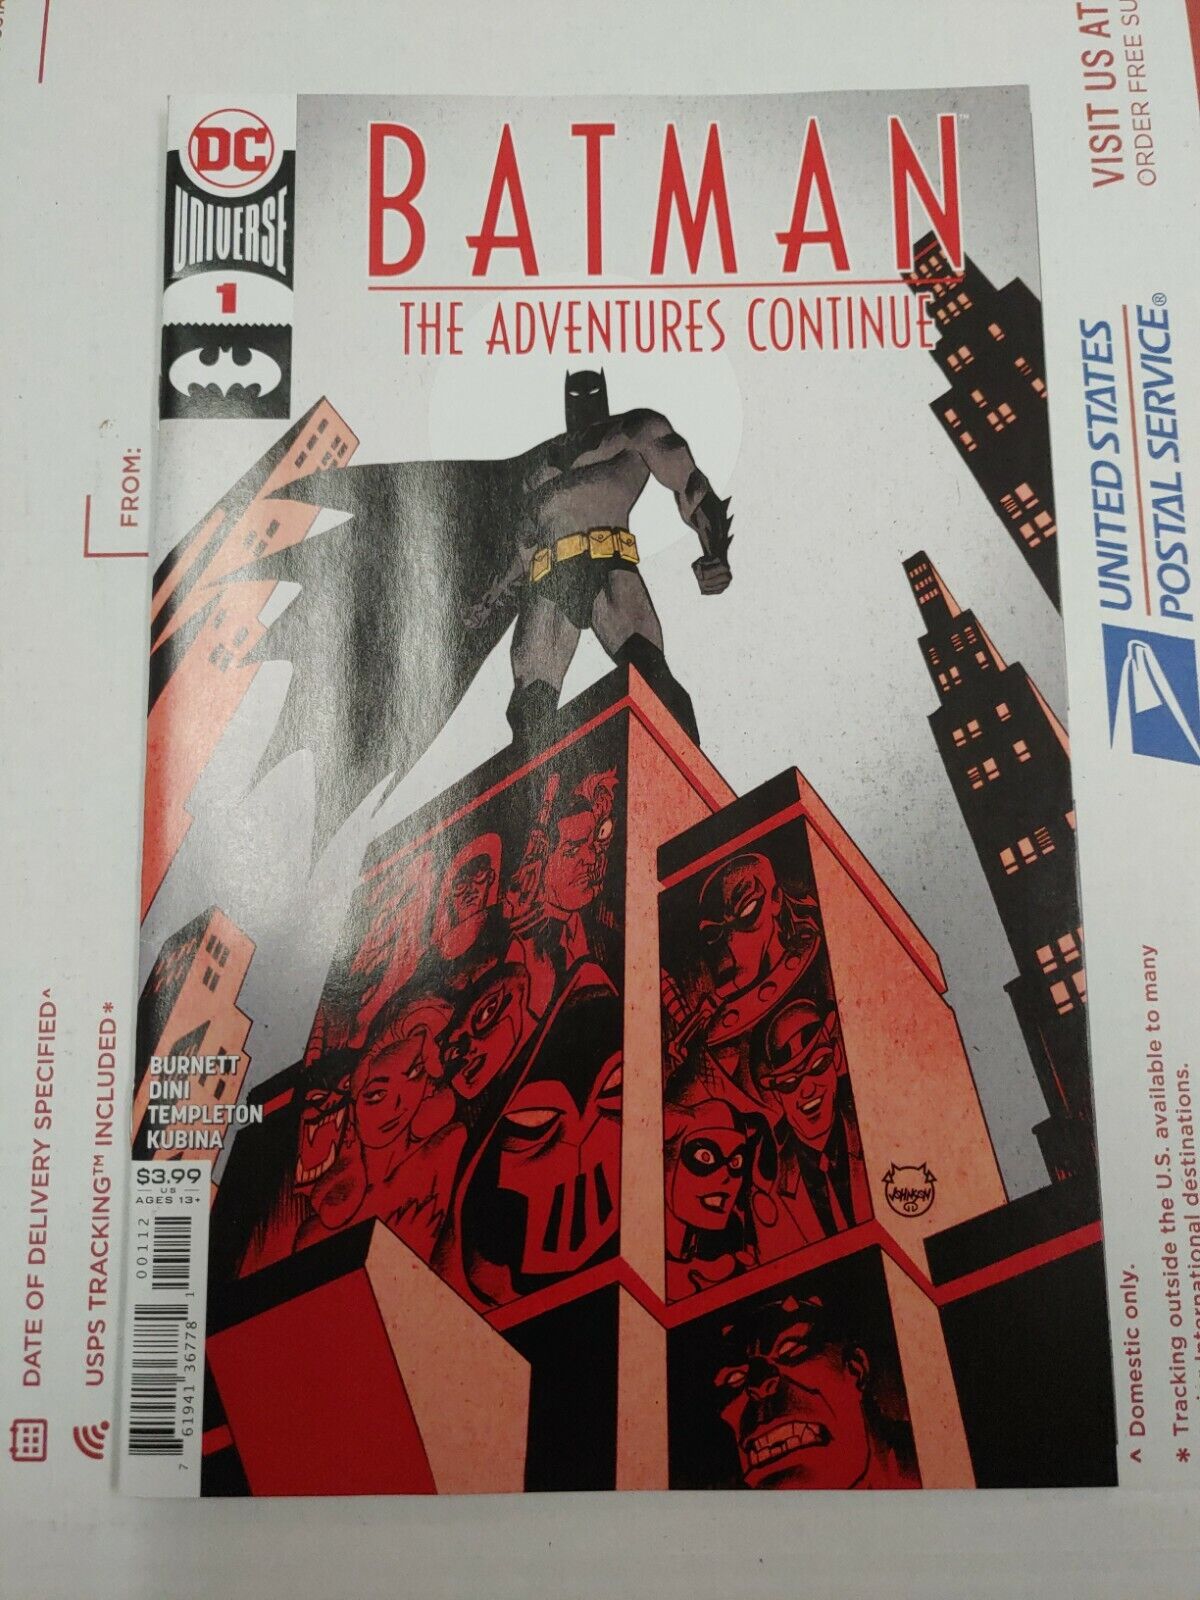 BATMAN THE ADVENTURES CONTINUE #1 Second Printing